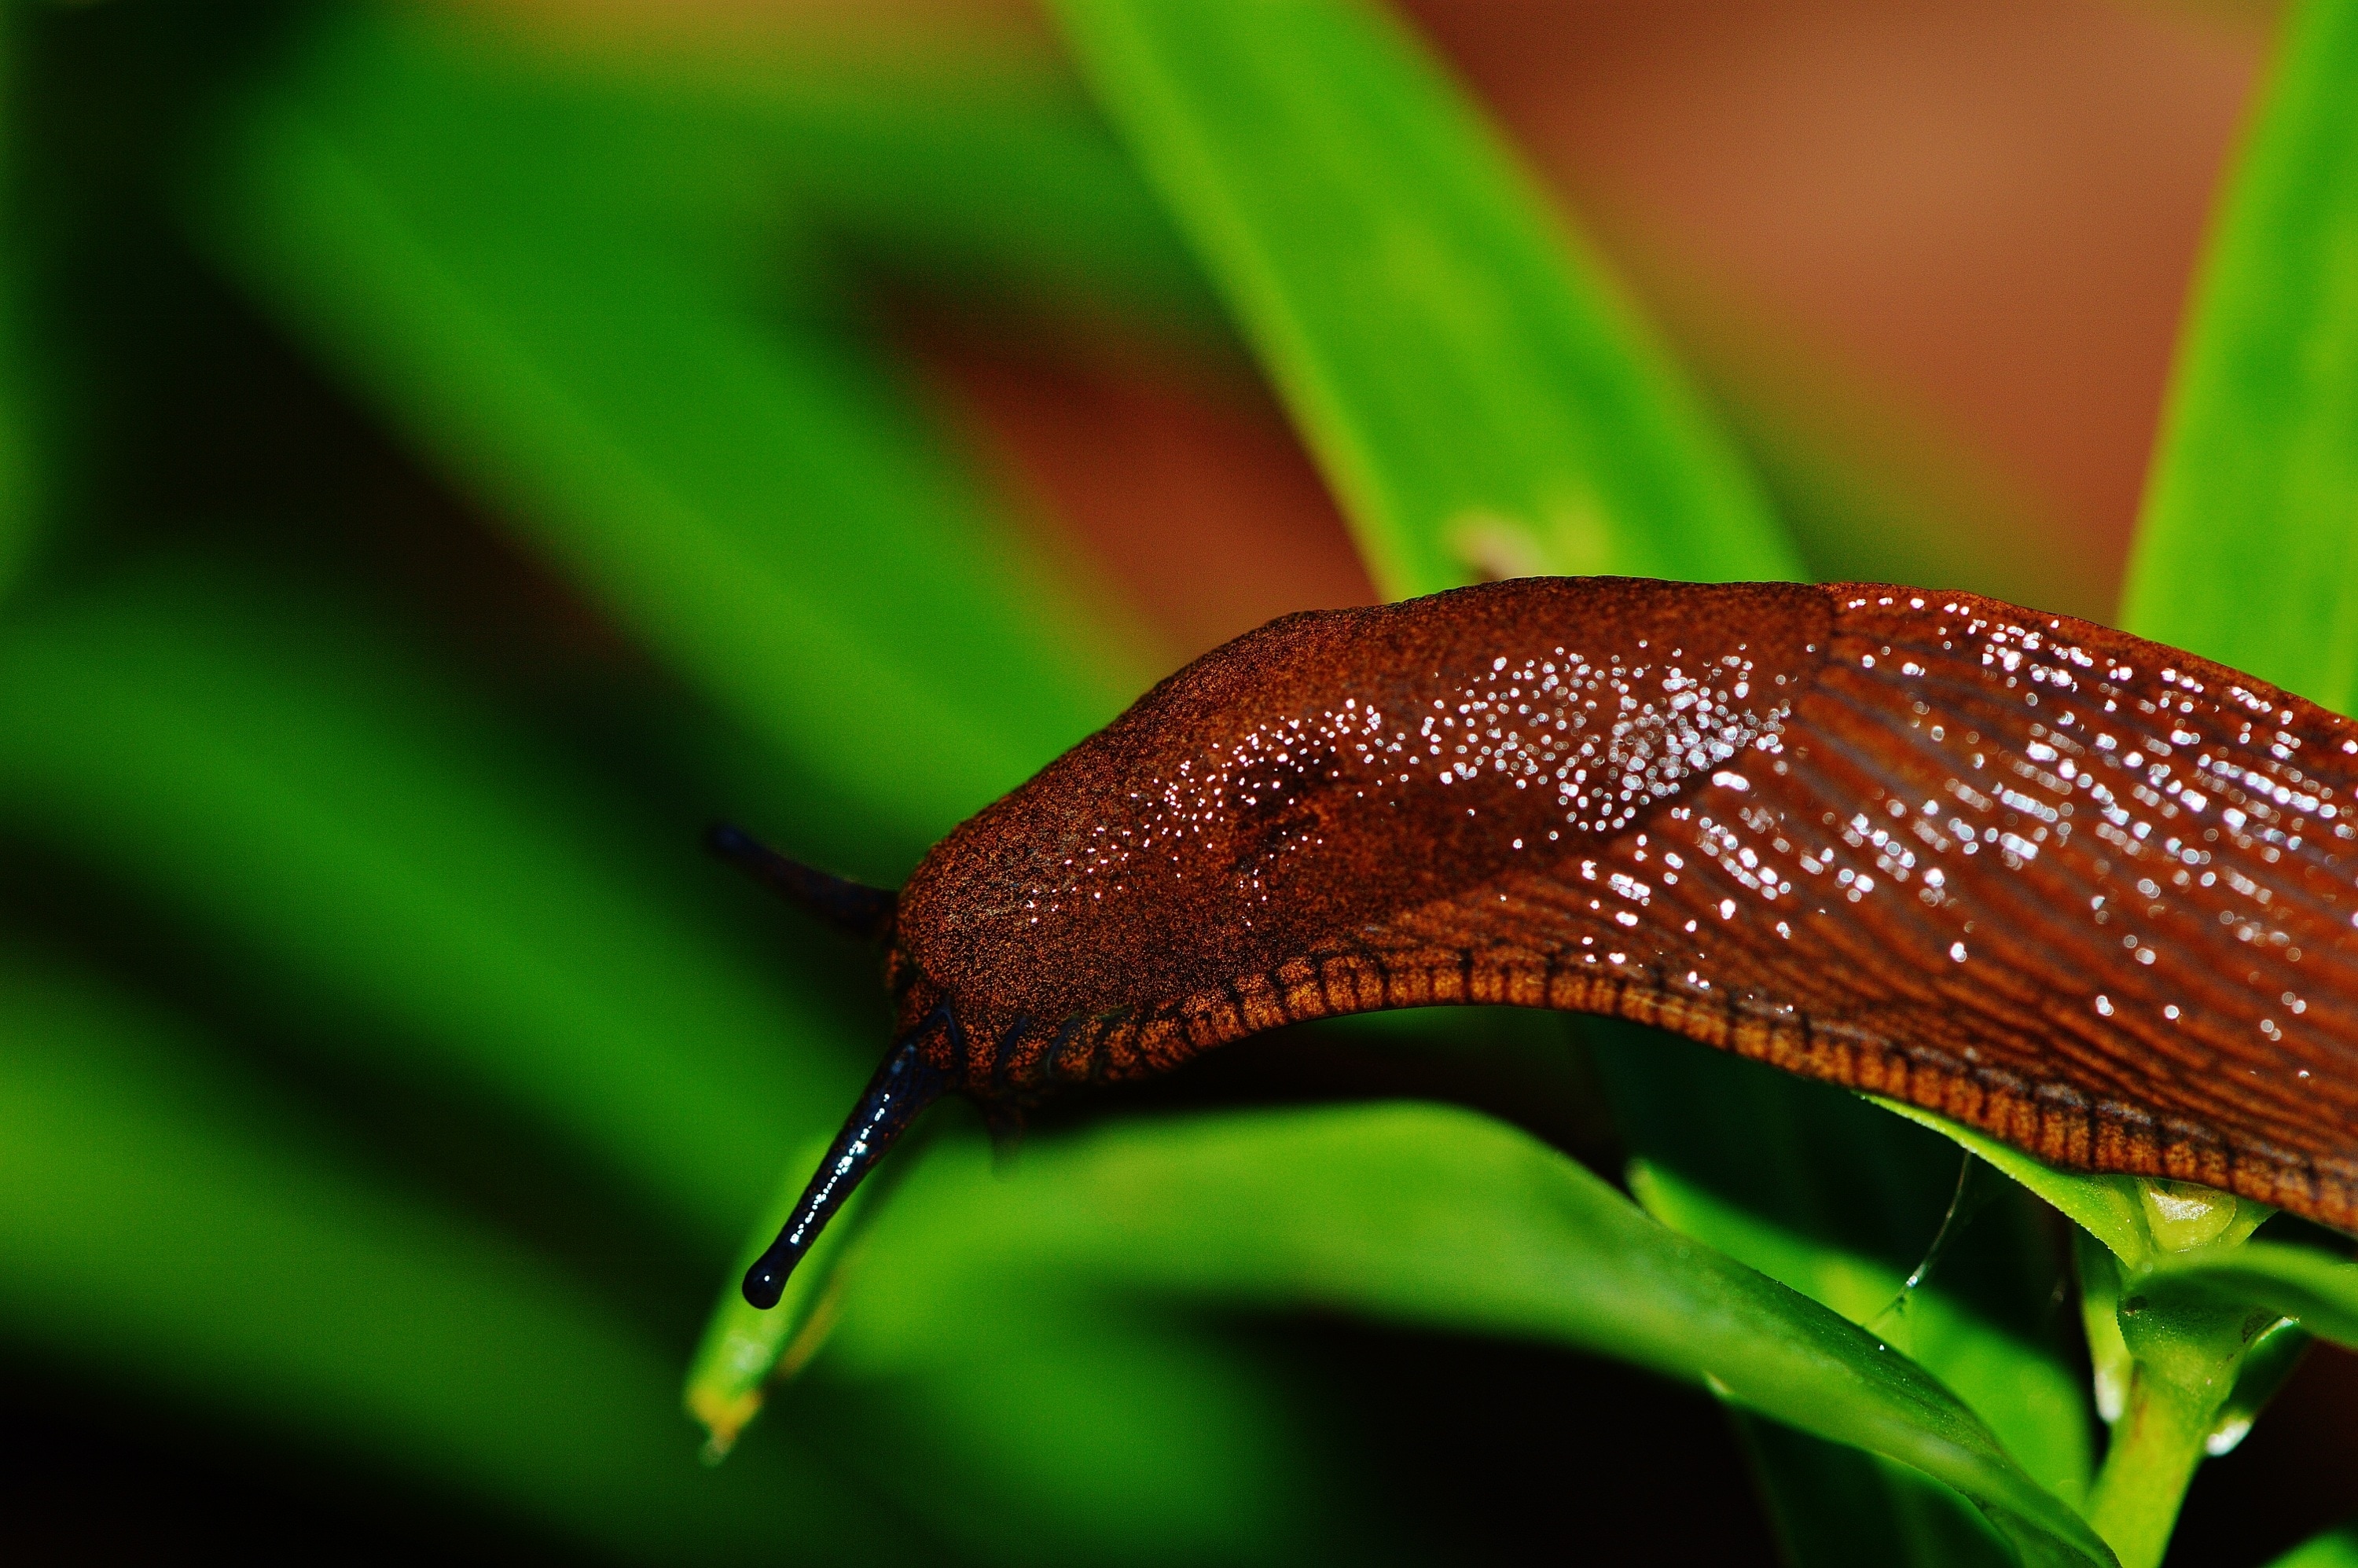 brown and black slug